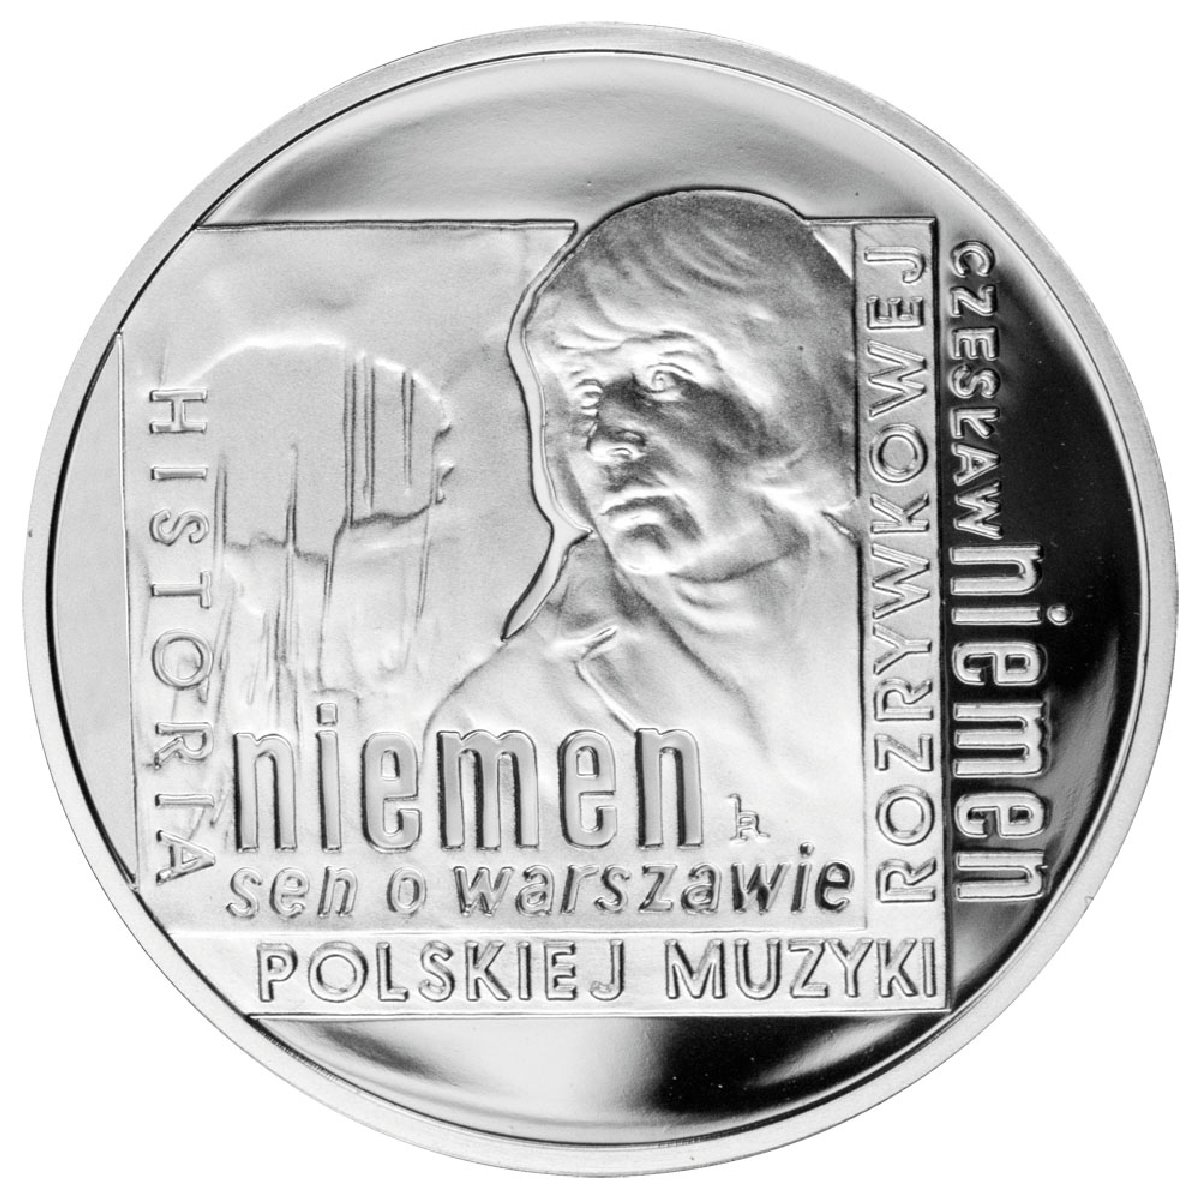 10zl-czeslaw-niemen-rewers-monety